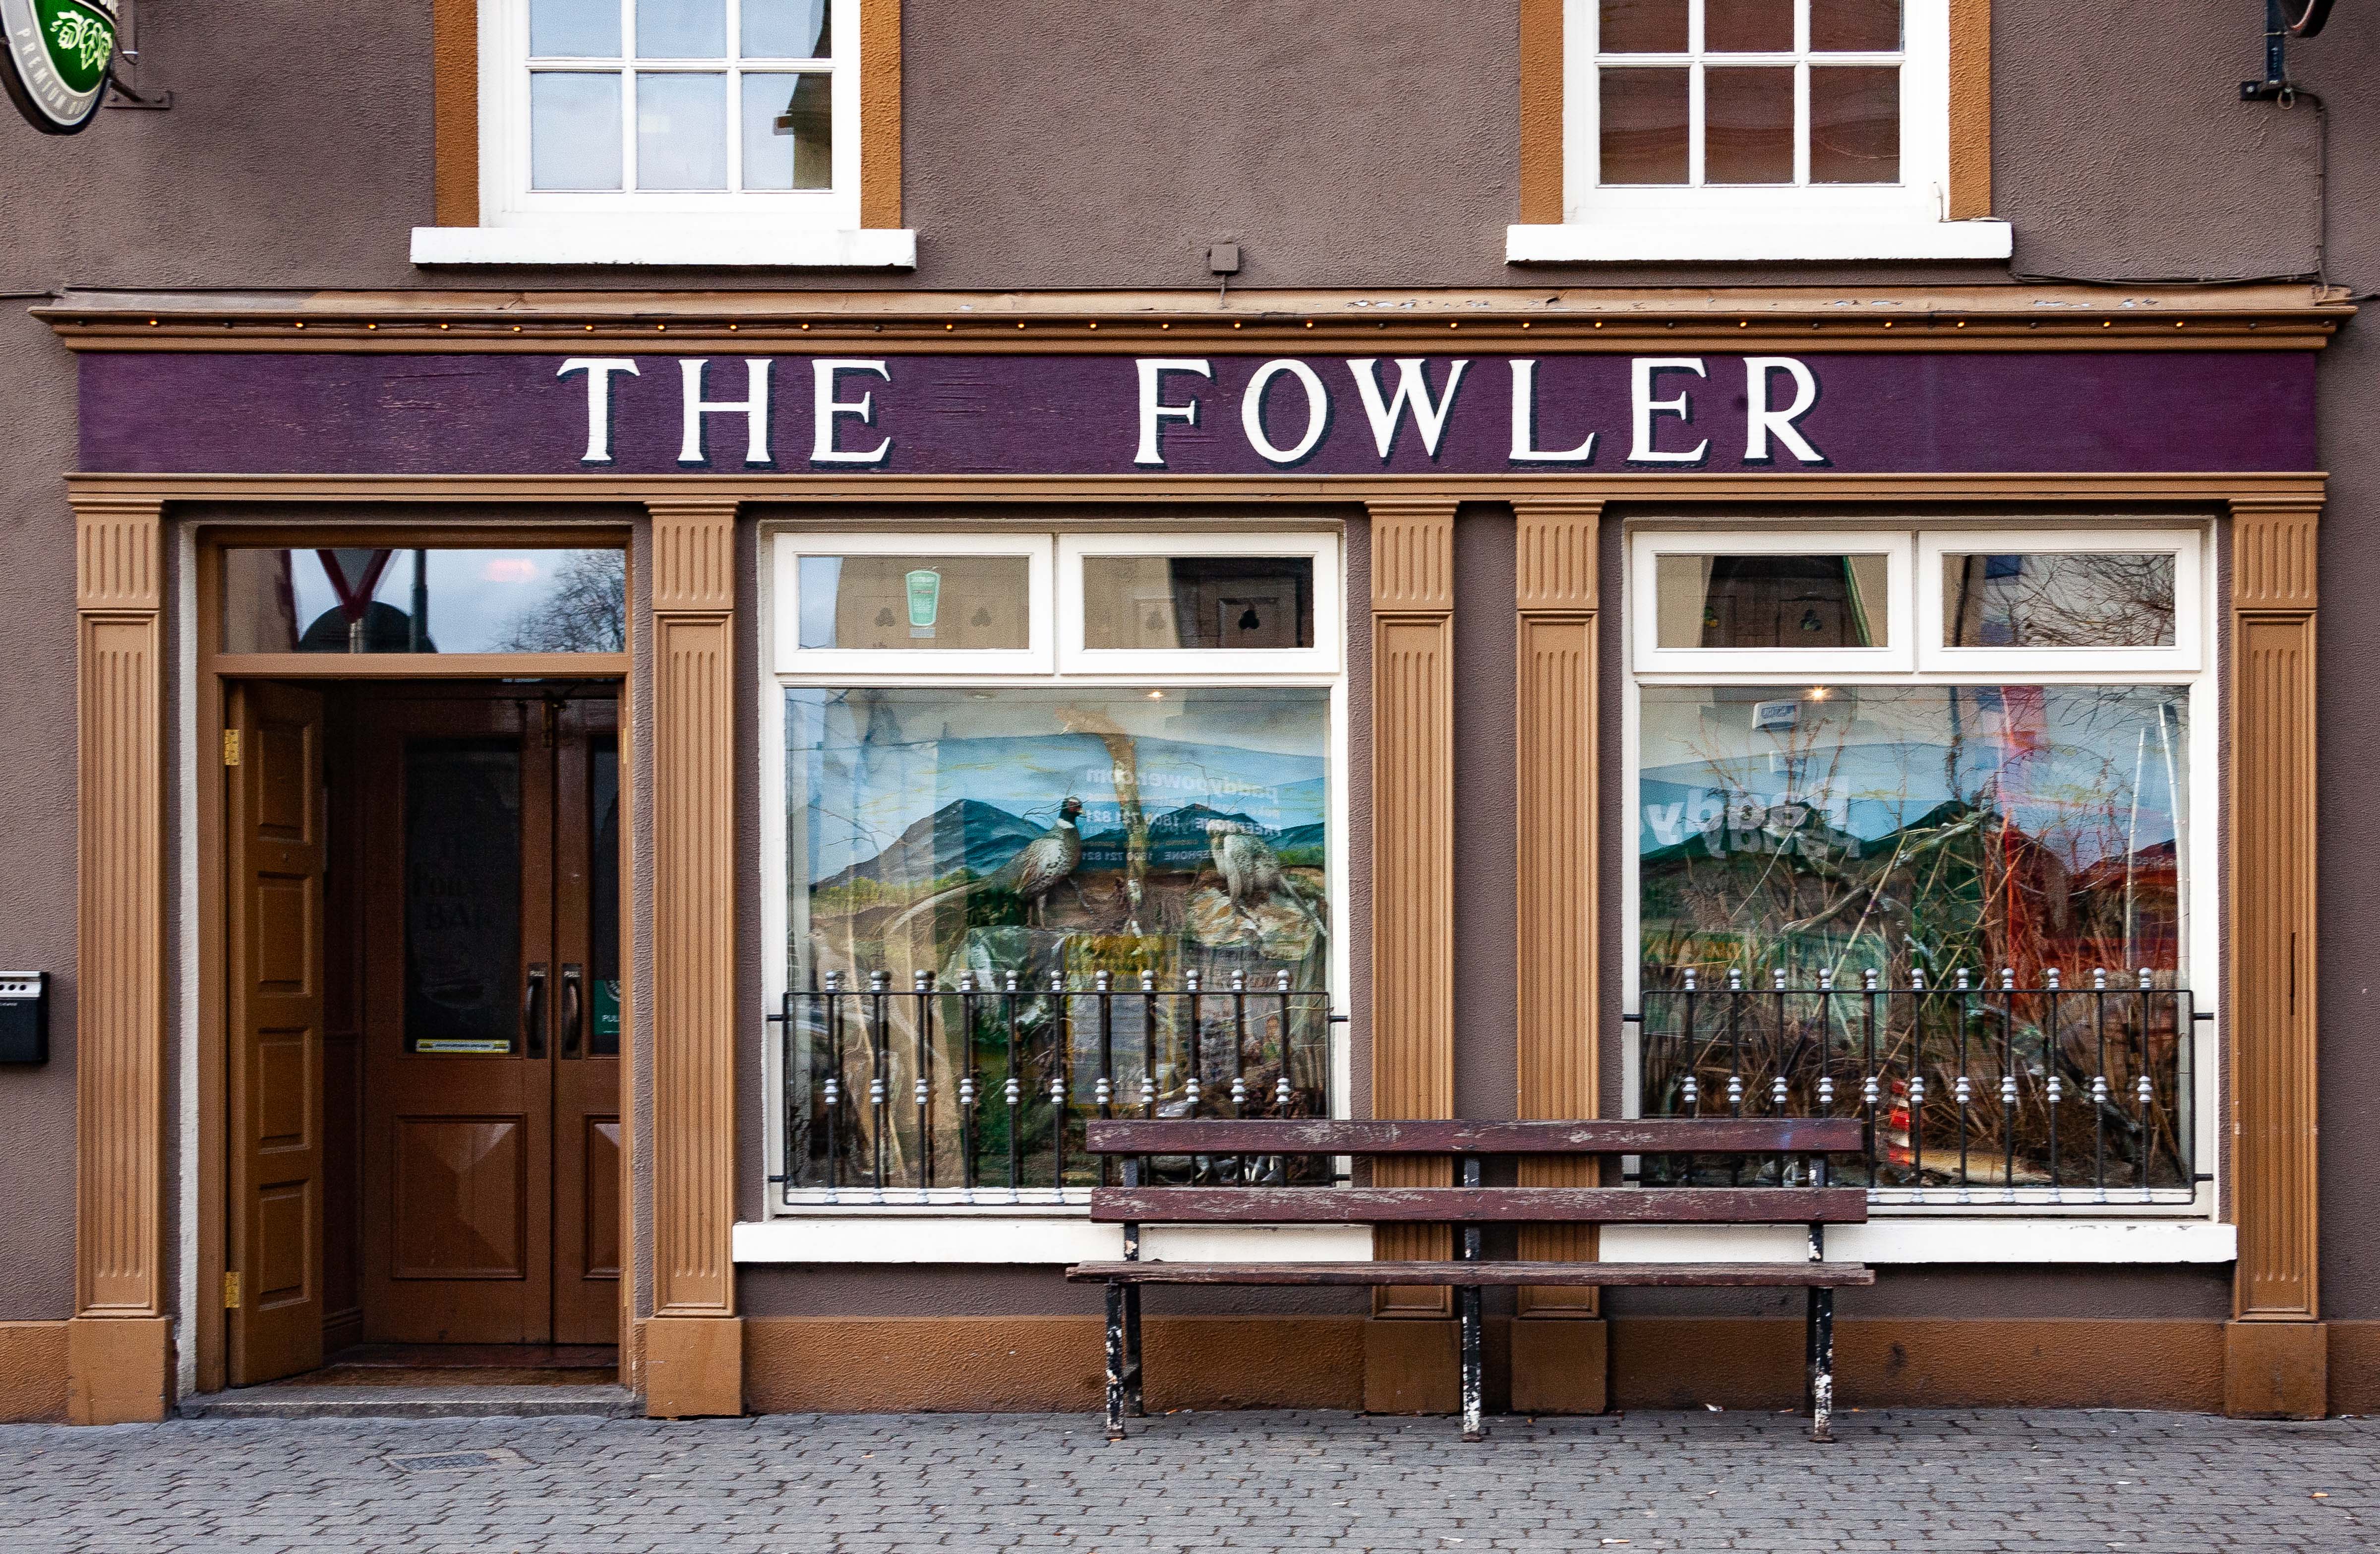 Ireland, Wexford Prov, The Fowler, 2009, IMG 9752